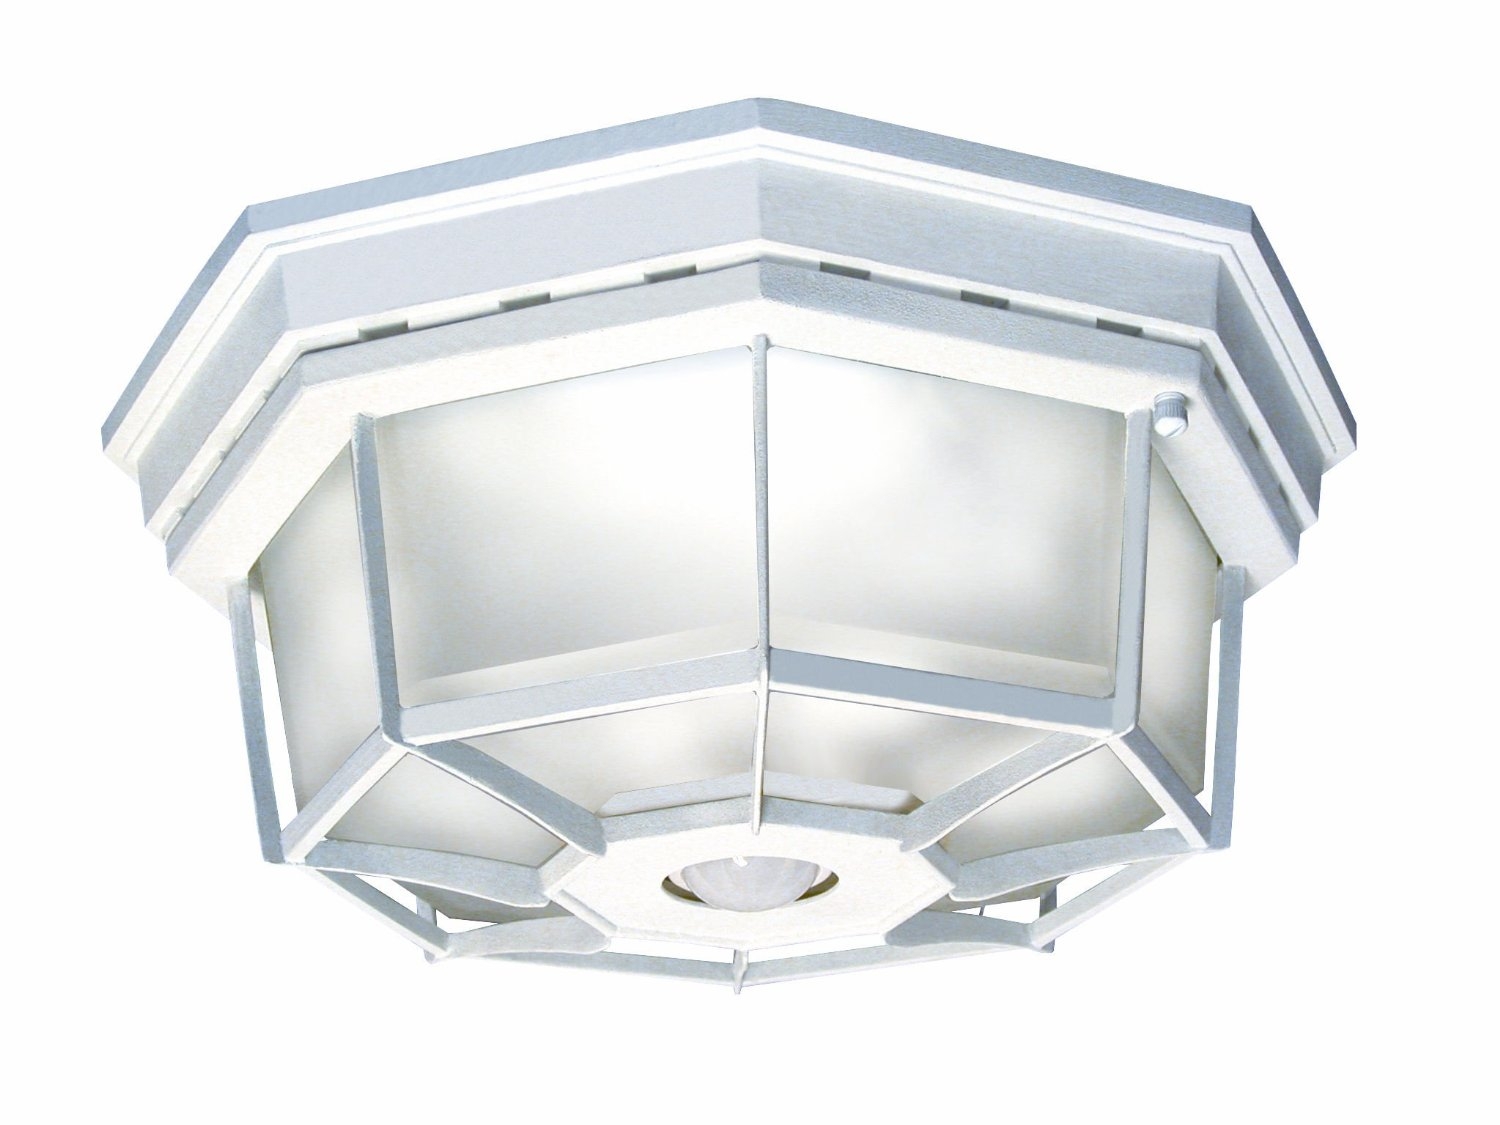 Motion Sensing Ceiling Light Fixture1500 X 1125